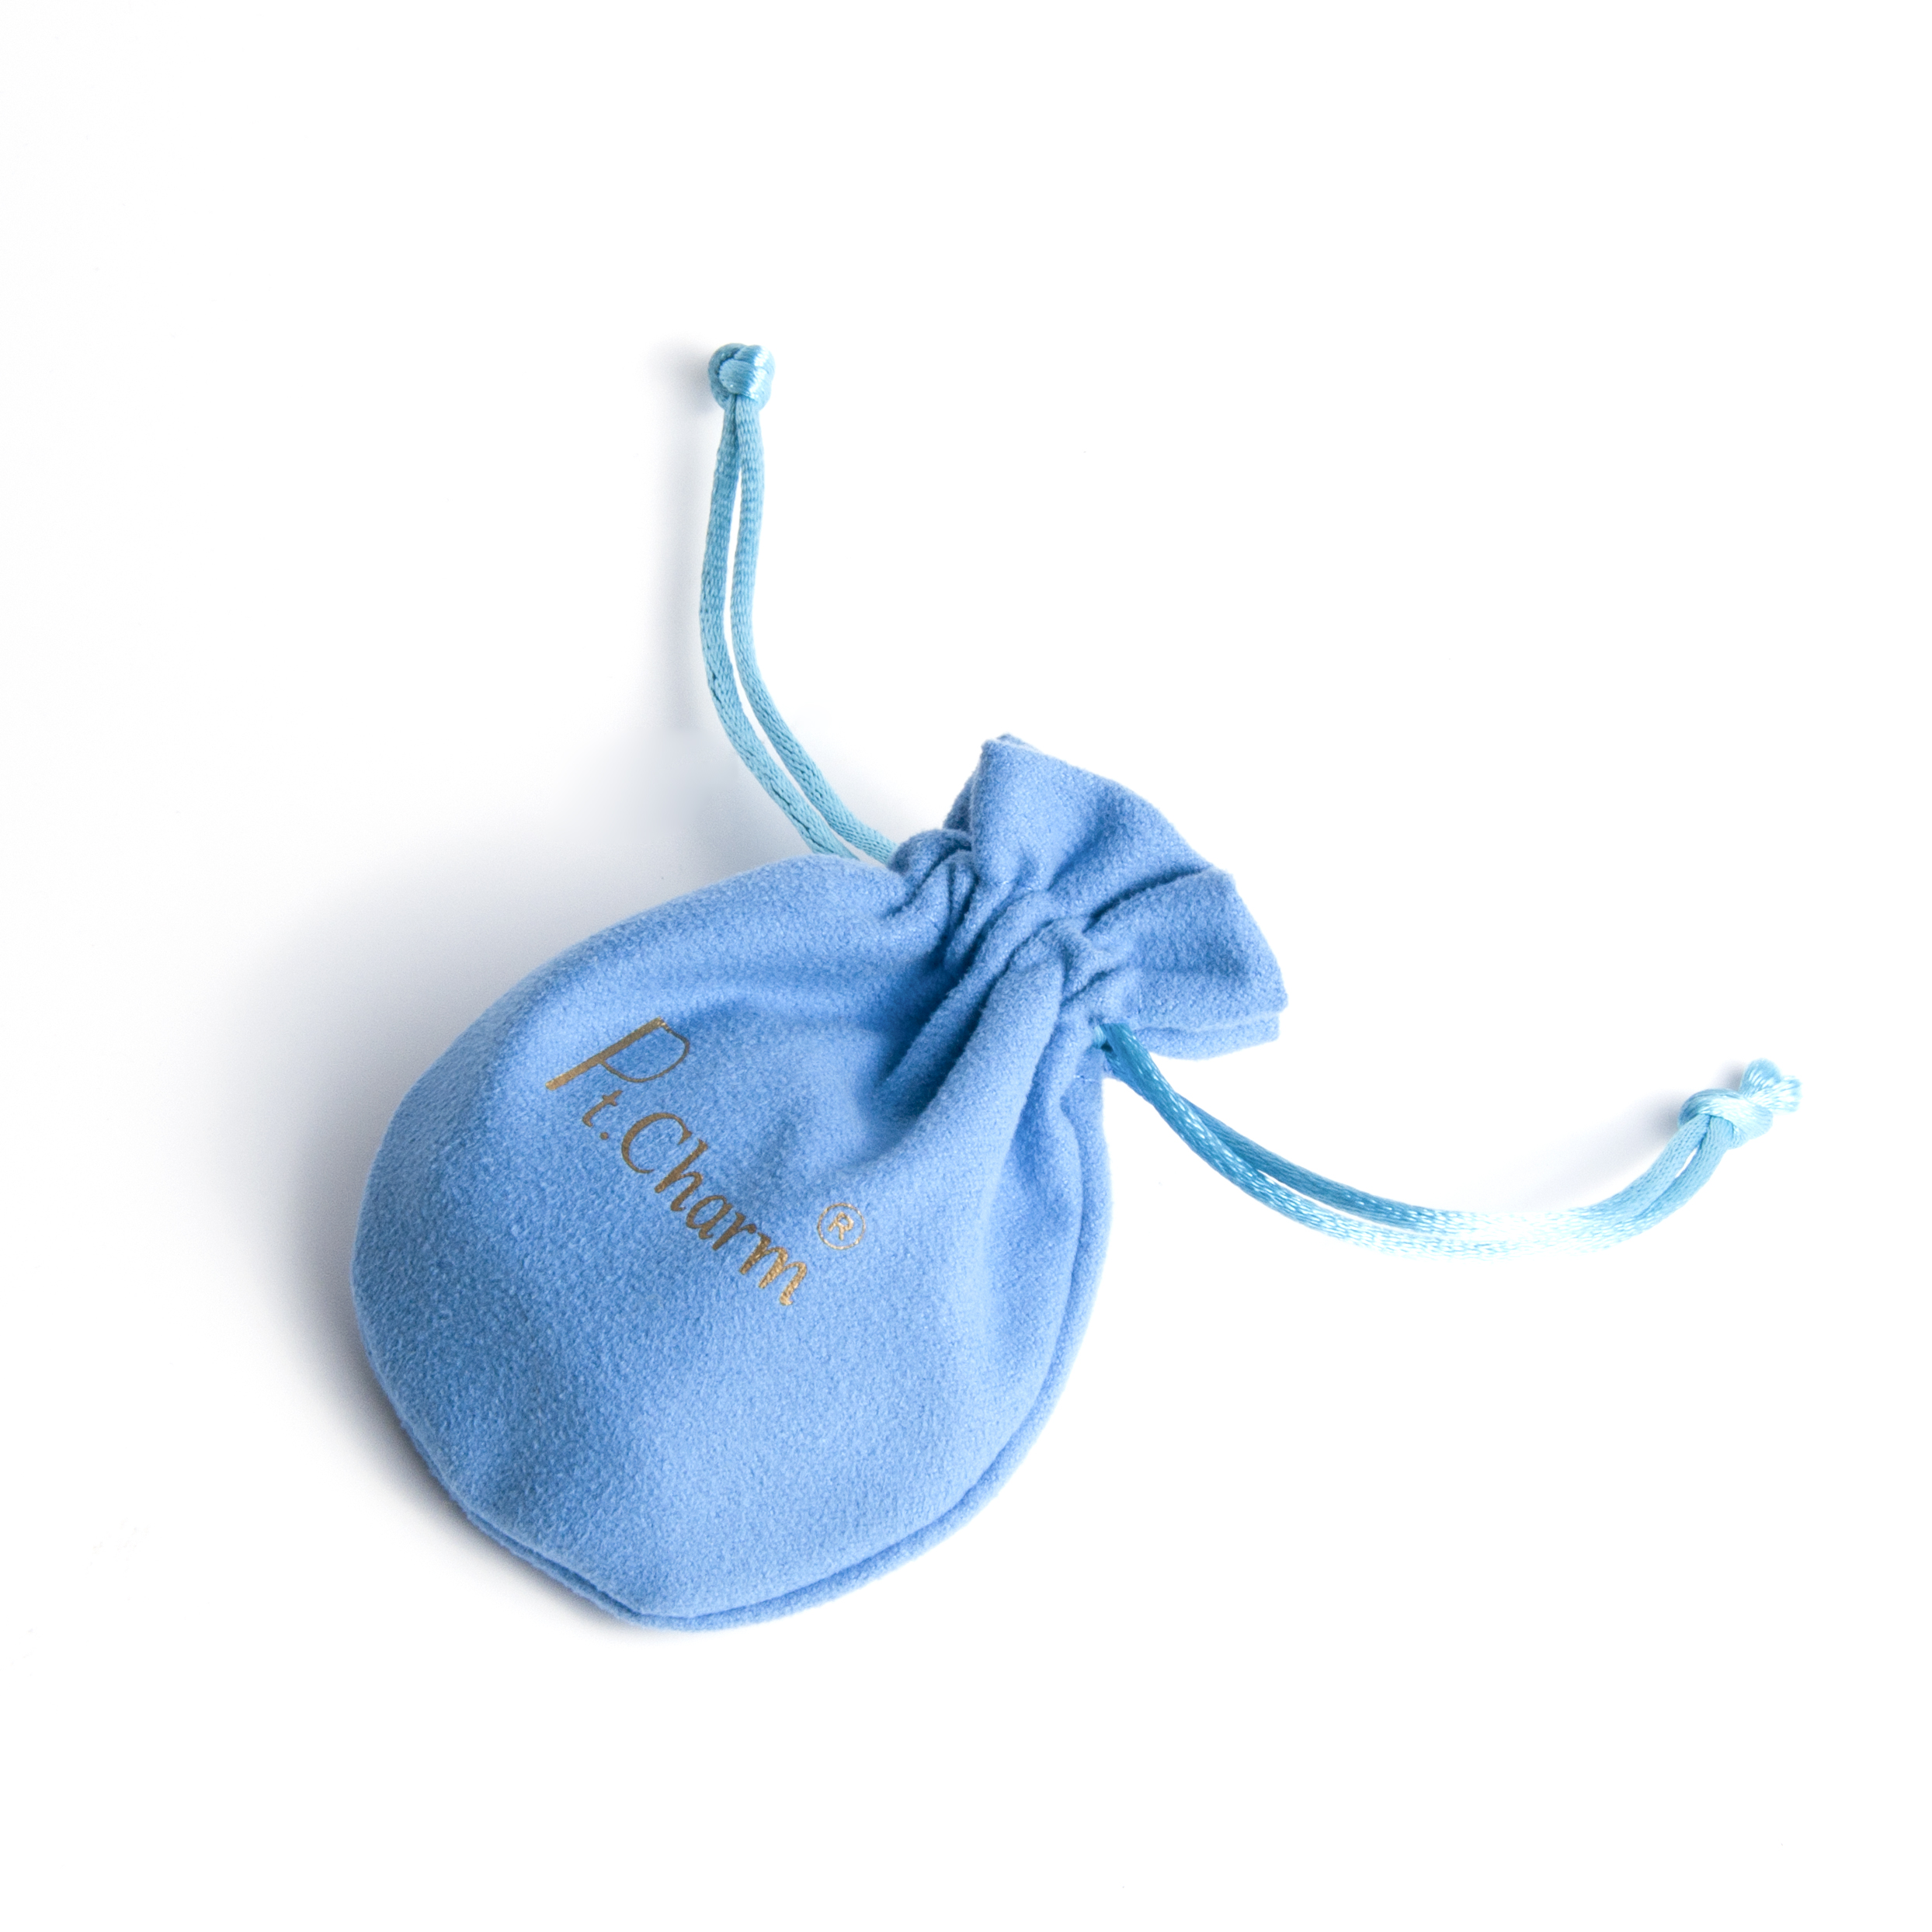 Bolsa de cordón de terciopelo azul personalizado para embalaje de joyas con doble capa interior